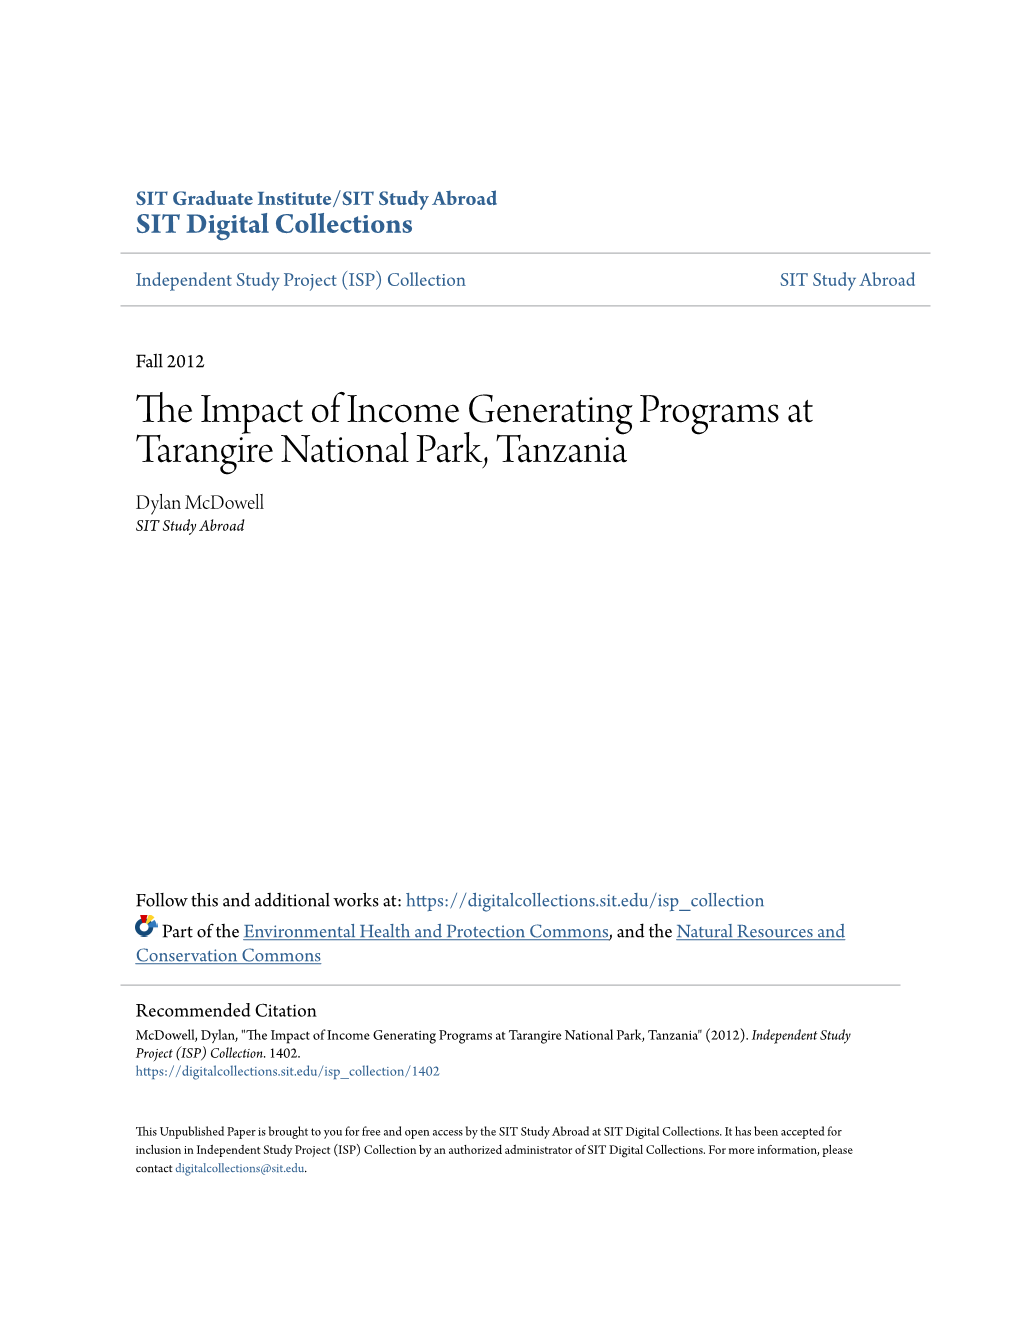 The Impact of Income Generating Programs at Tarangire National Park, Tanzania